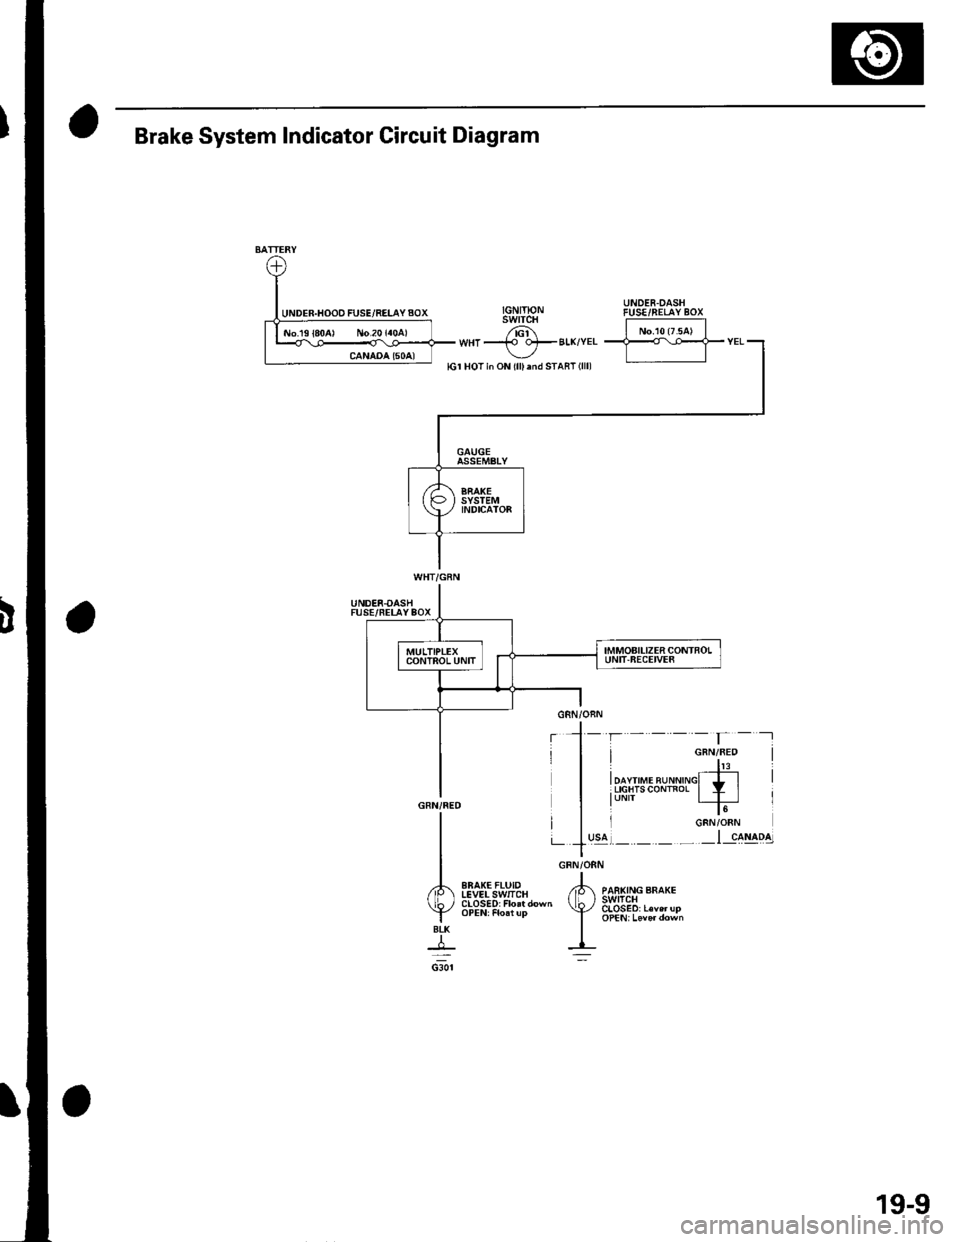 HONDA CIVIC 2002 7.G Workshop Manual GRN/ORN
,tk ,o"","o ""o*.(b, 3s1E8,.""",,"
I oPEN,Leve,down
I-=:
I
A
YBtK
+csor
Brake System Indicator Circuit Diagram
UNDER.OASHFUSE/FELAYBOX
EBAK€FLUIDIEVELSwlICH
19-9 